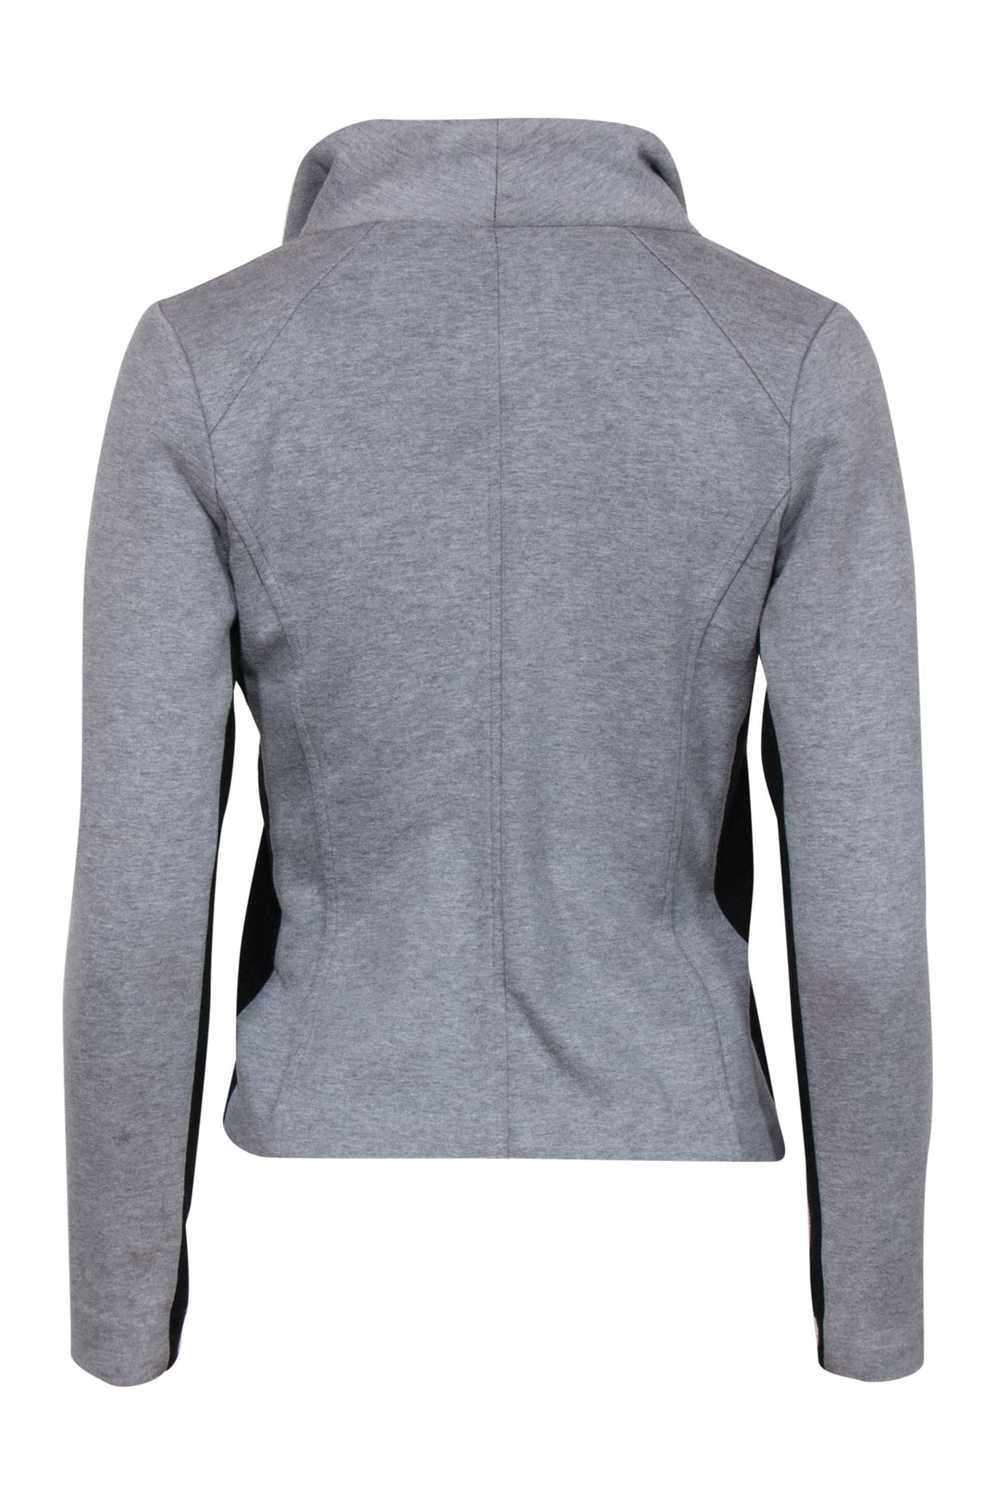 Vince - Gray Cotton Zip-Up Moto-Style Jacket Sz XS - image 3